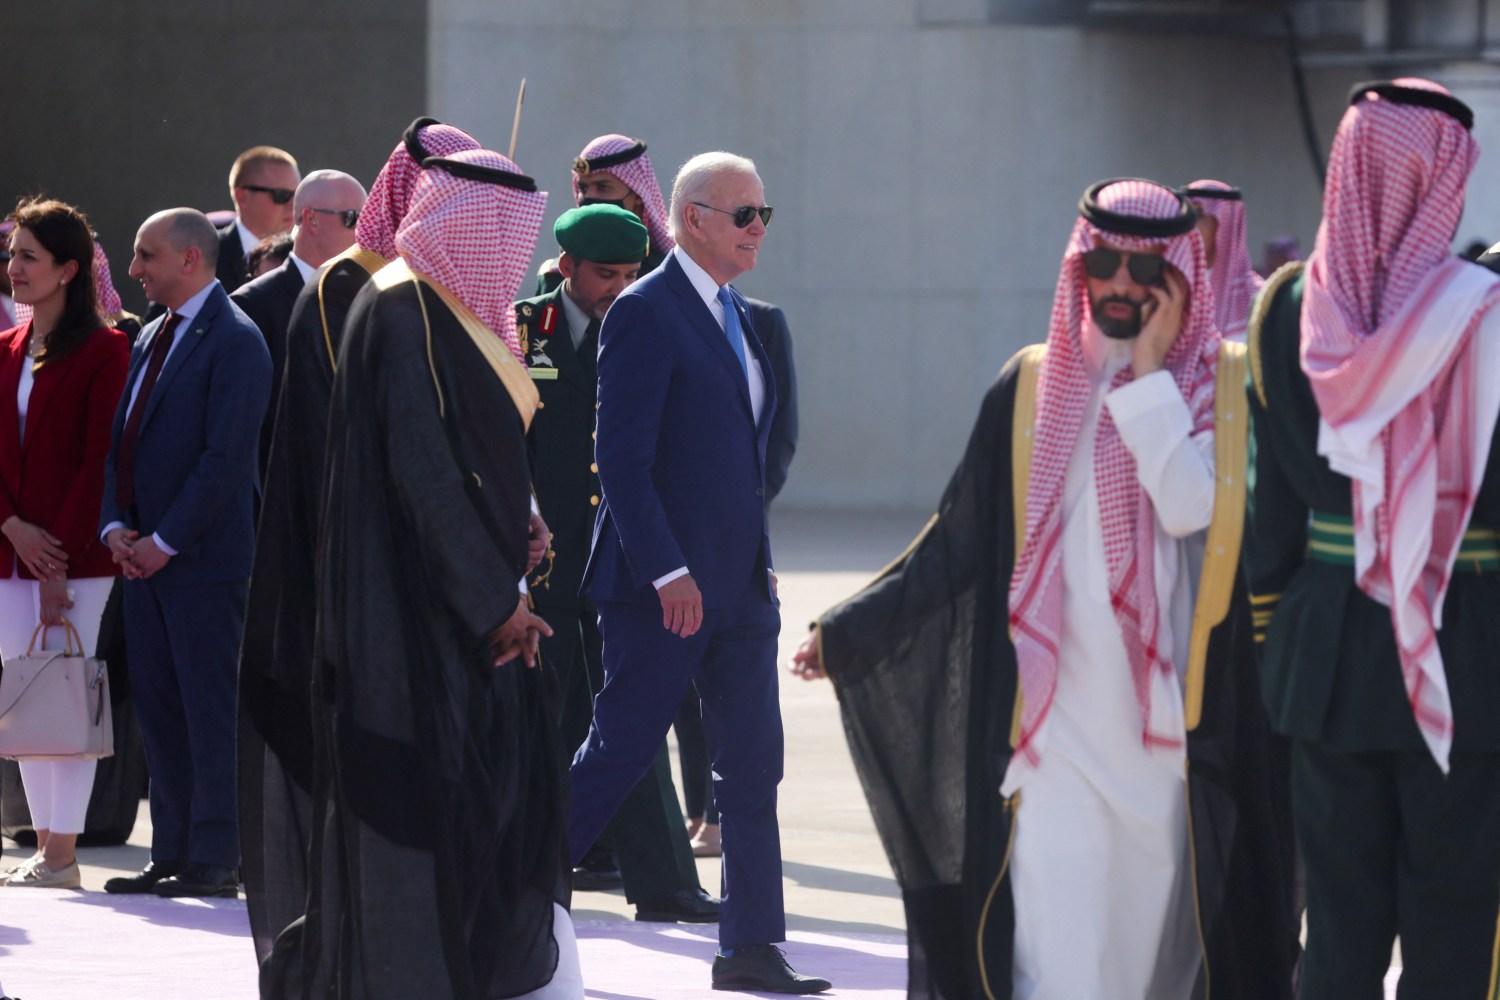 U.S. President Joe Biden walks to board a plane following an Arab summit, at King Abdulaziz International Airprot, in Jeddah, Saudi Arabia, July 16, 2022. REUTERS/Evelyn Hockstein